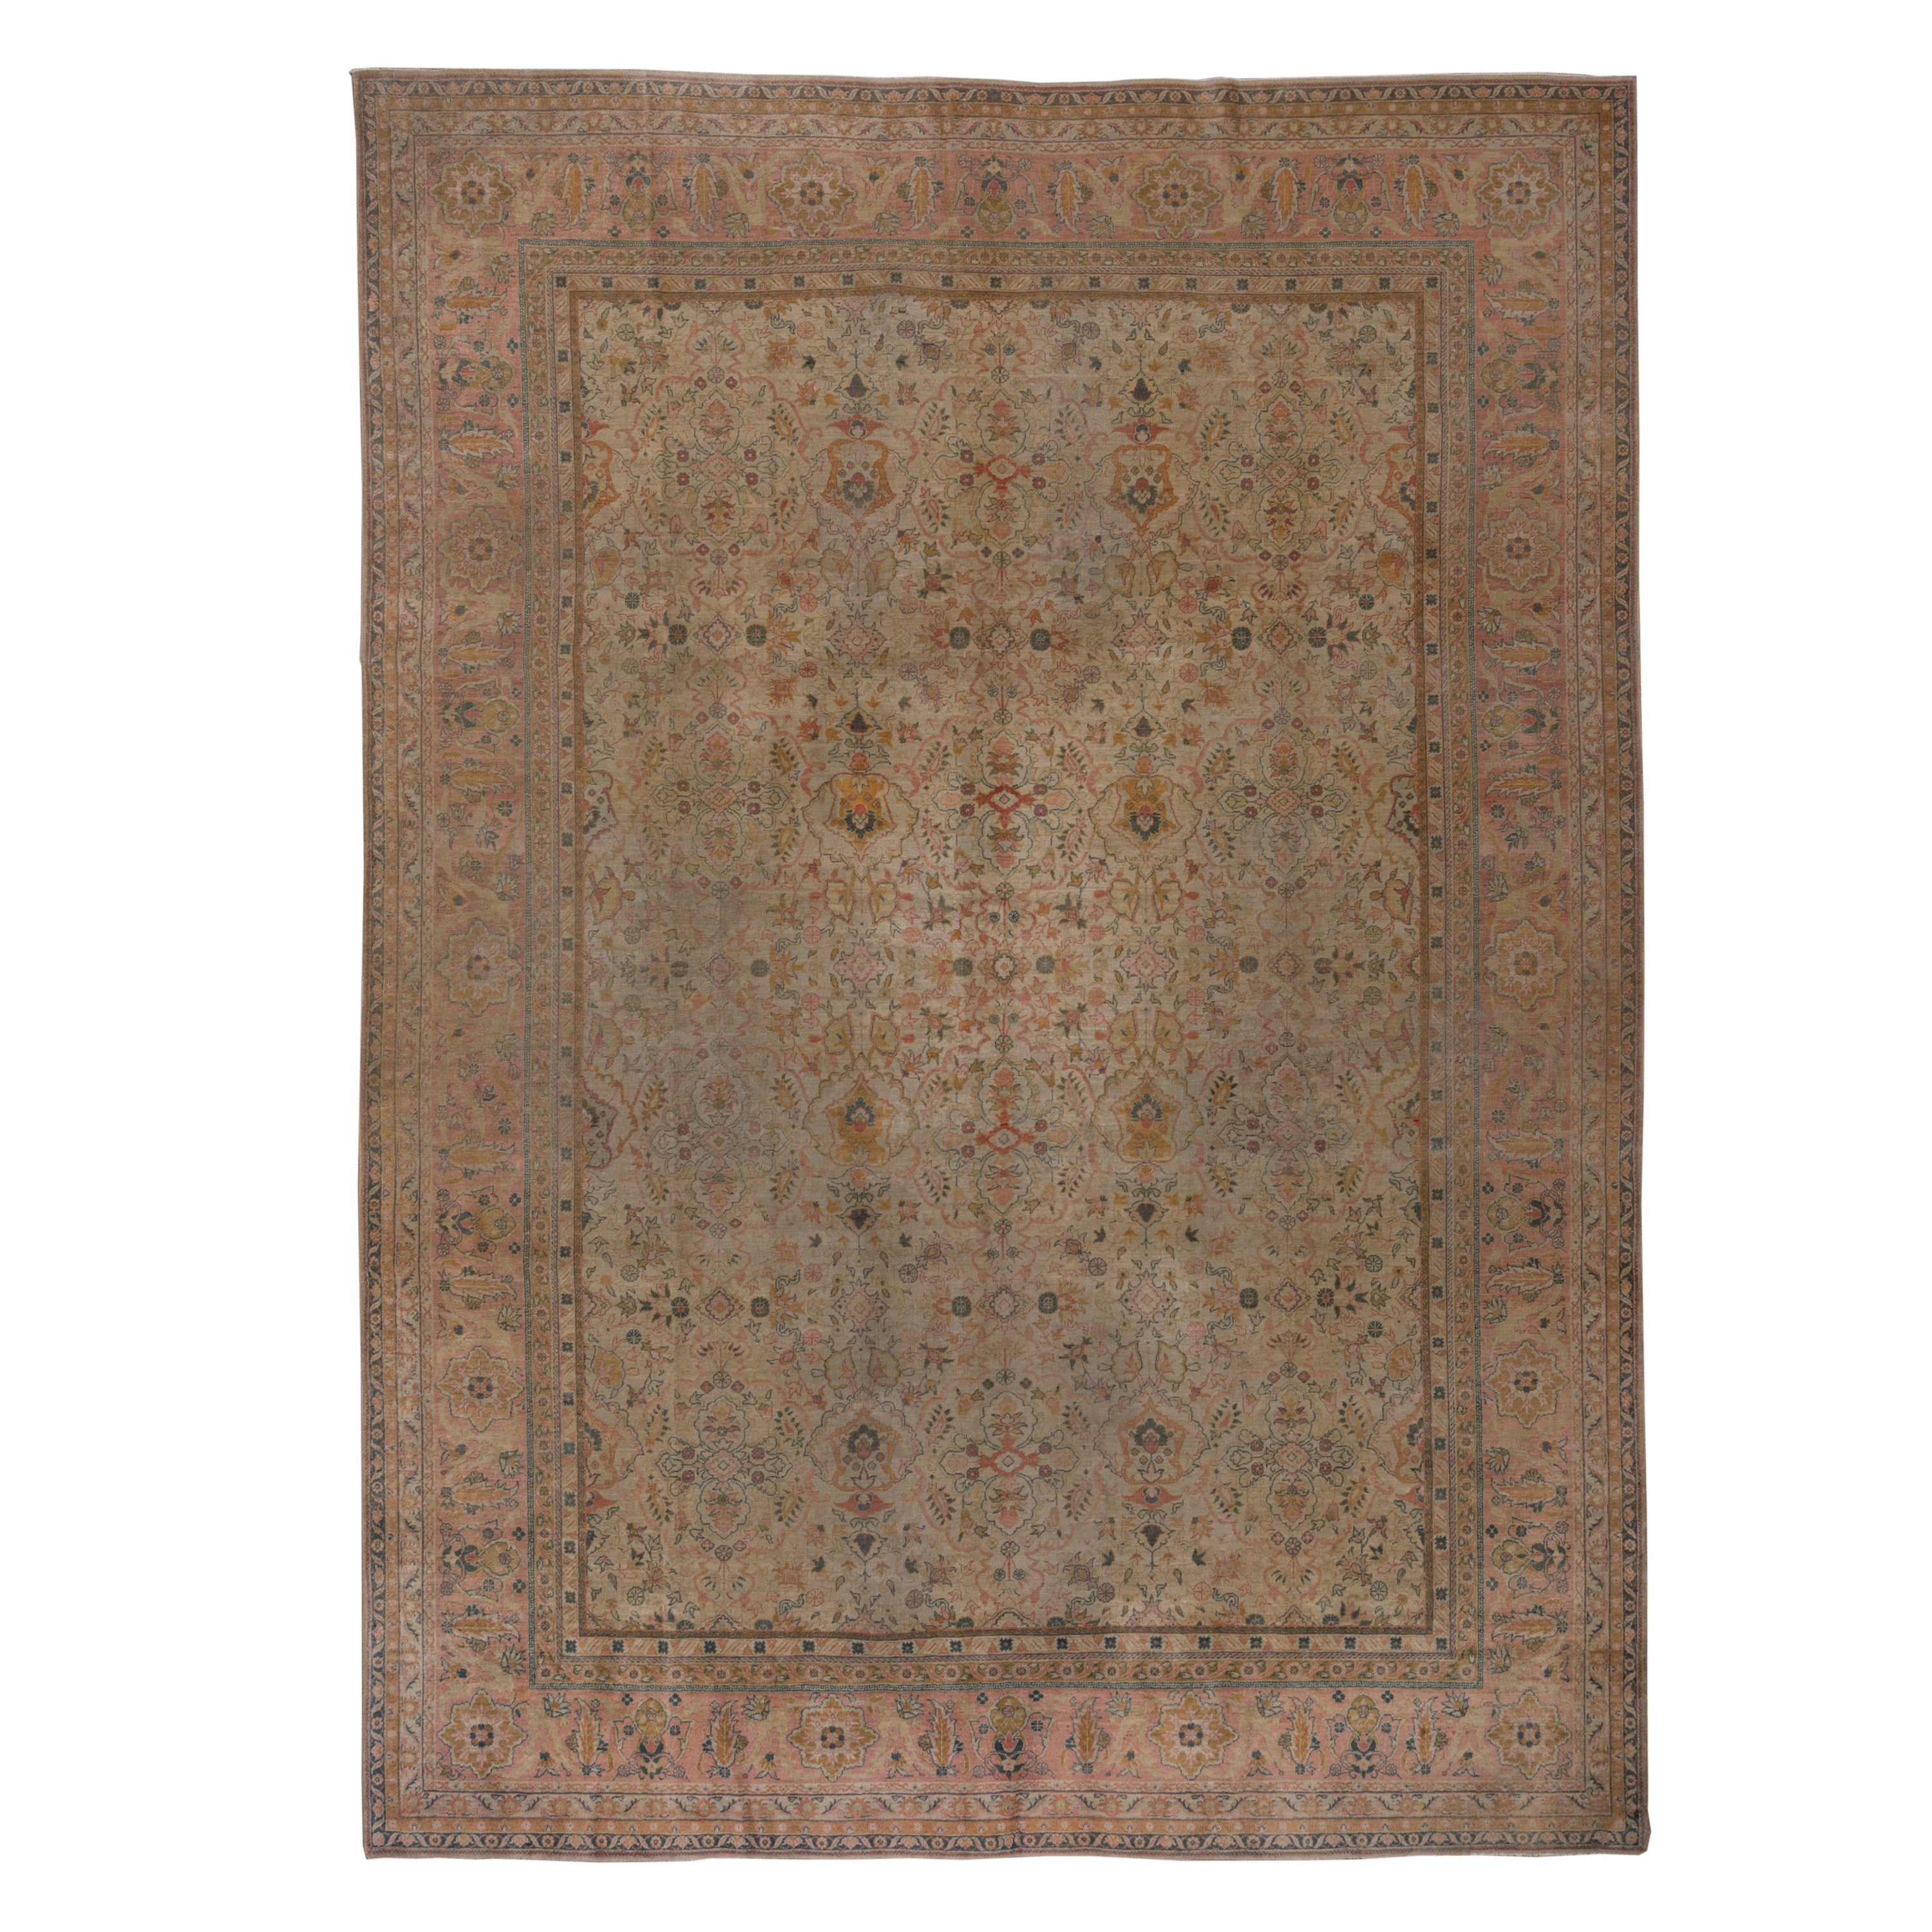 Antique Turkish Sivas Carpet, Allover Neutral Field & Colorful Accents